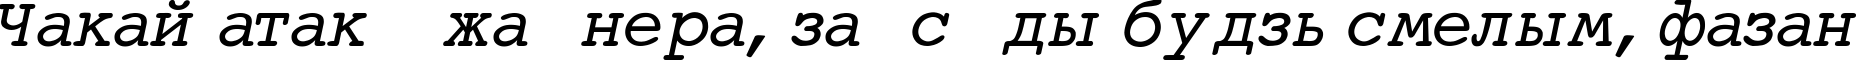 Пример написания шрифтом Courier-Normal-Italic текста на белорусском